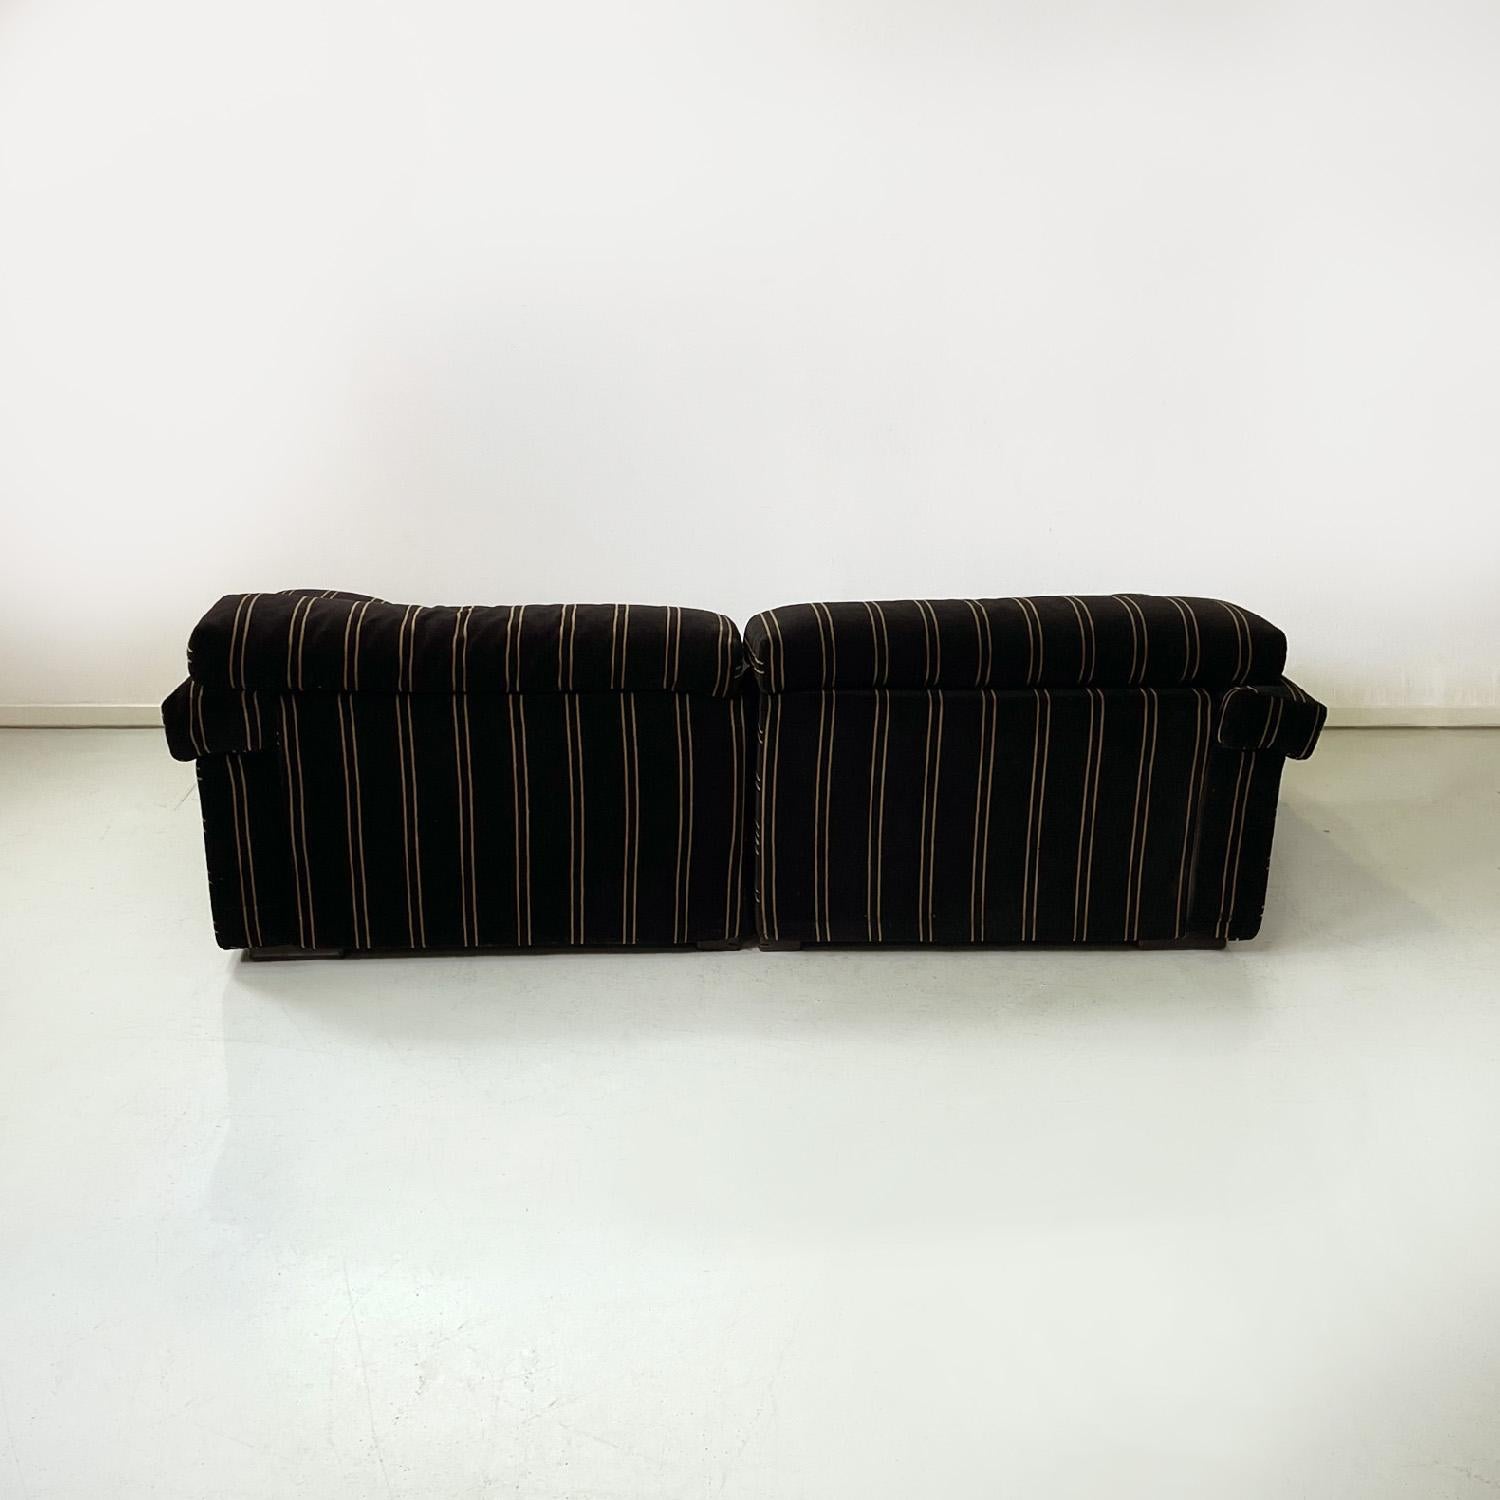 Late 20th Century Italian modern brown Erasmo Sofa by Afra and Tobia Scarpa for B&B Italia, 1980s